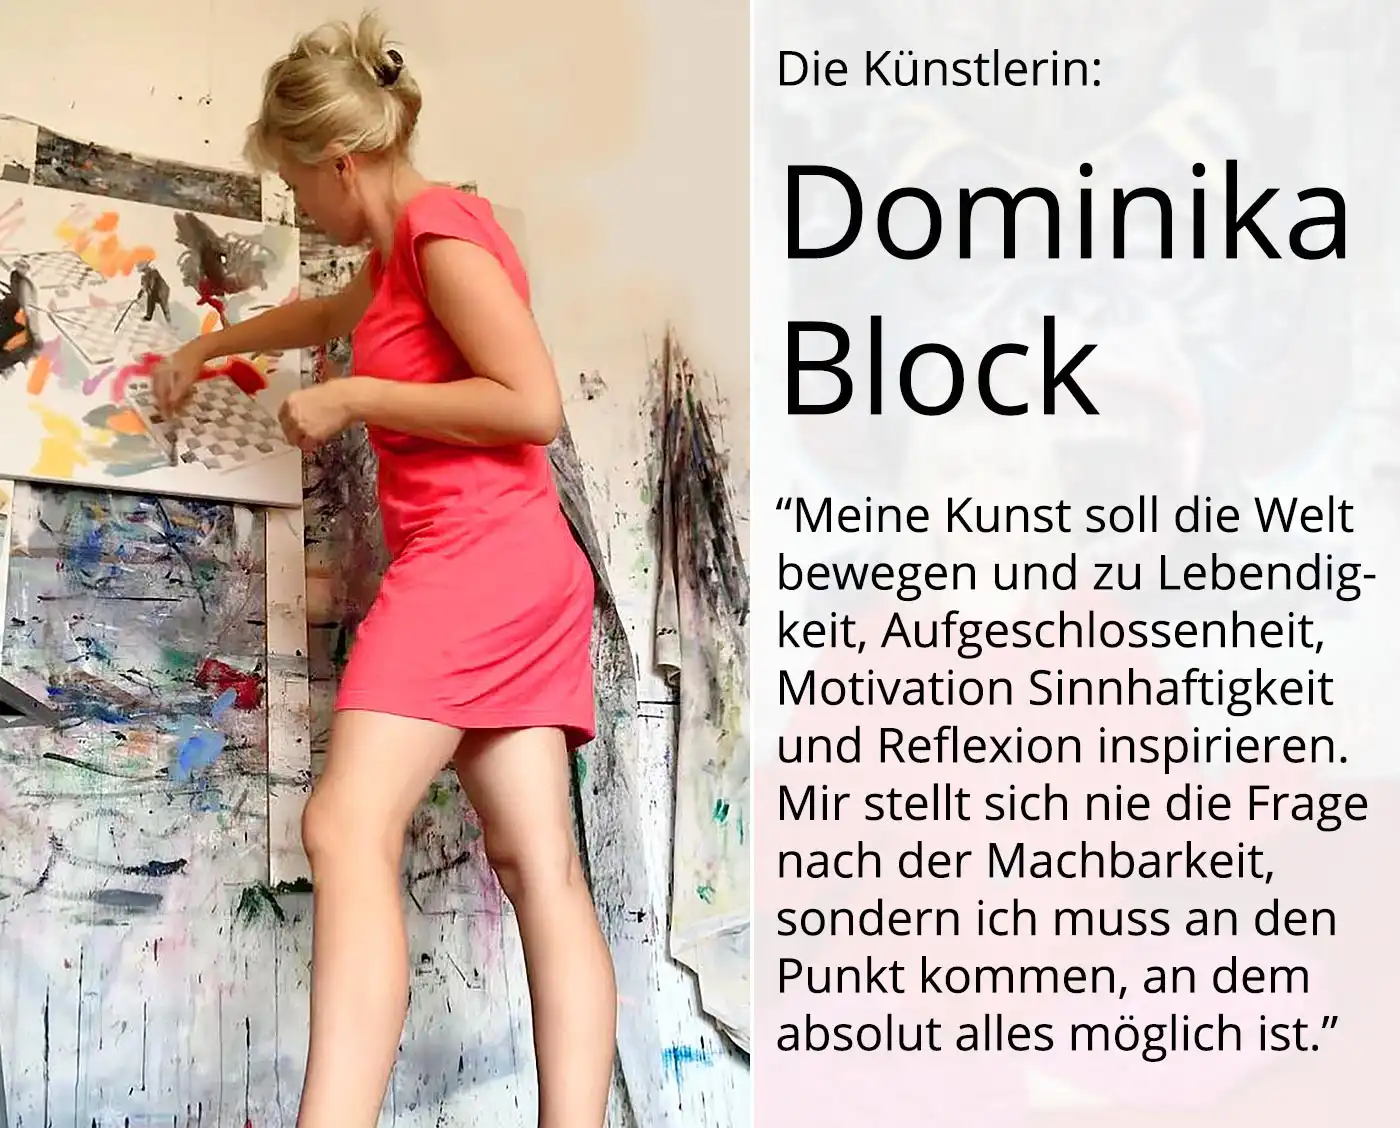 D. Block: "Die eingefrorene Rose", Original/Unikat, expressive Ölmalerei